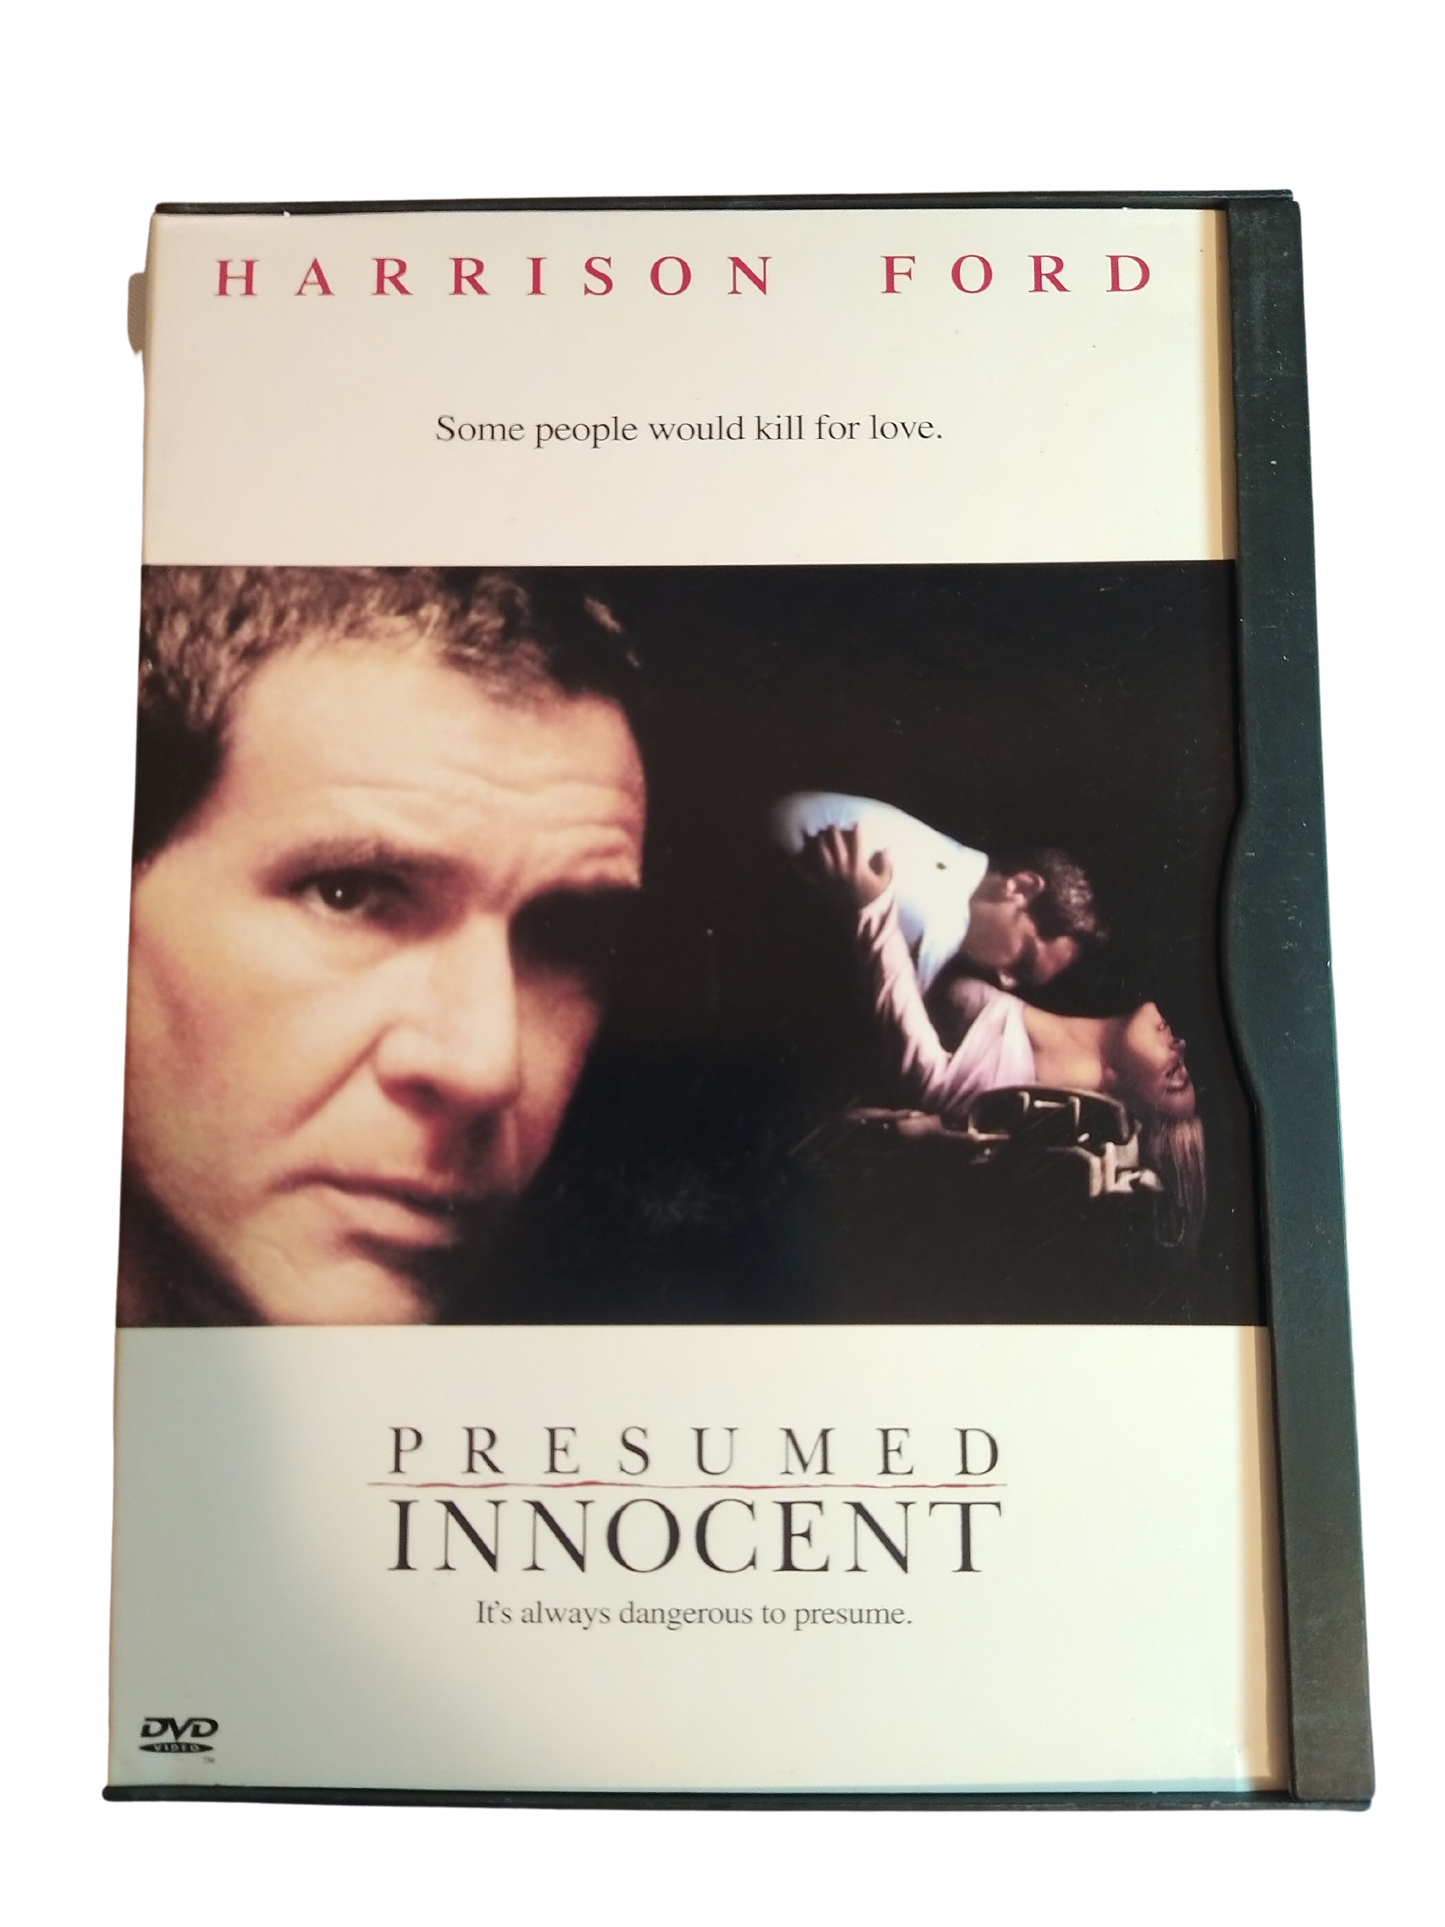 Presumed Innocent DVD - Starring Harrison Ford.